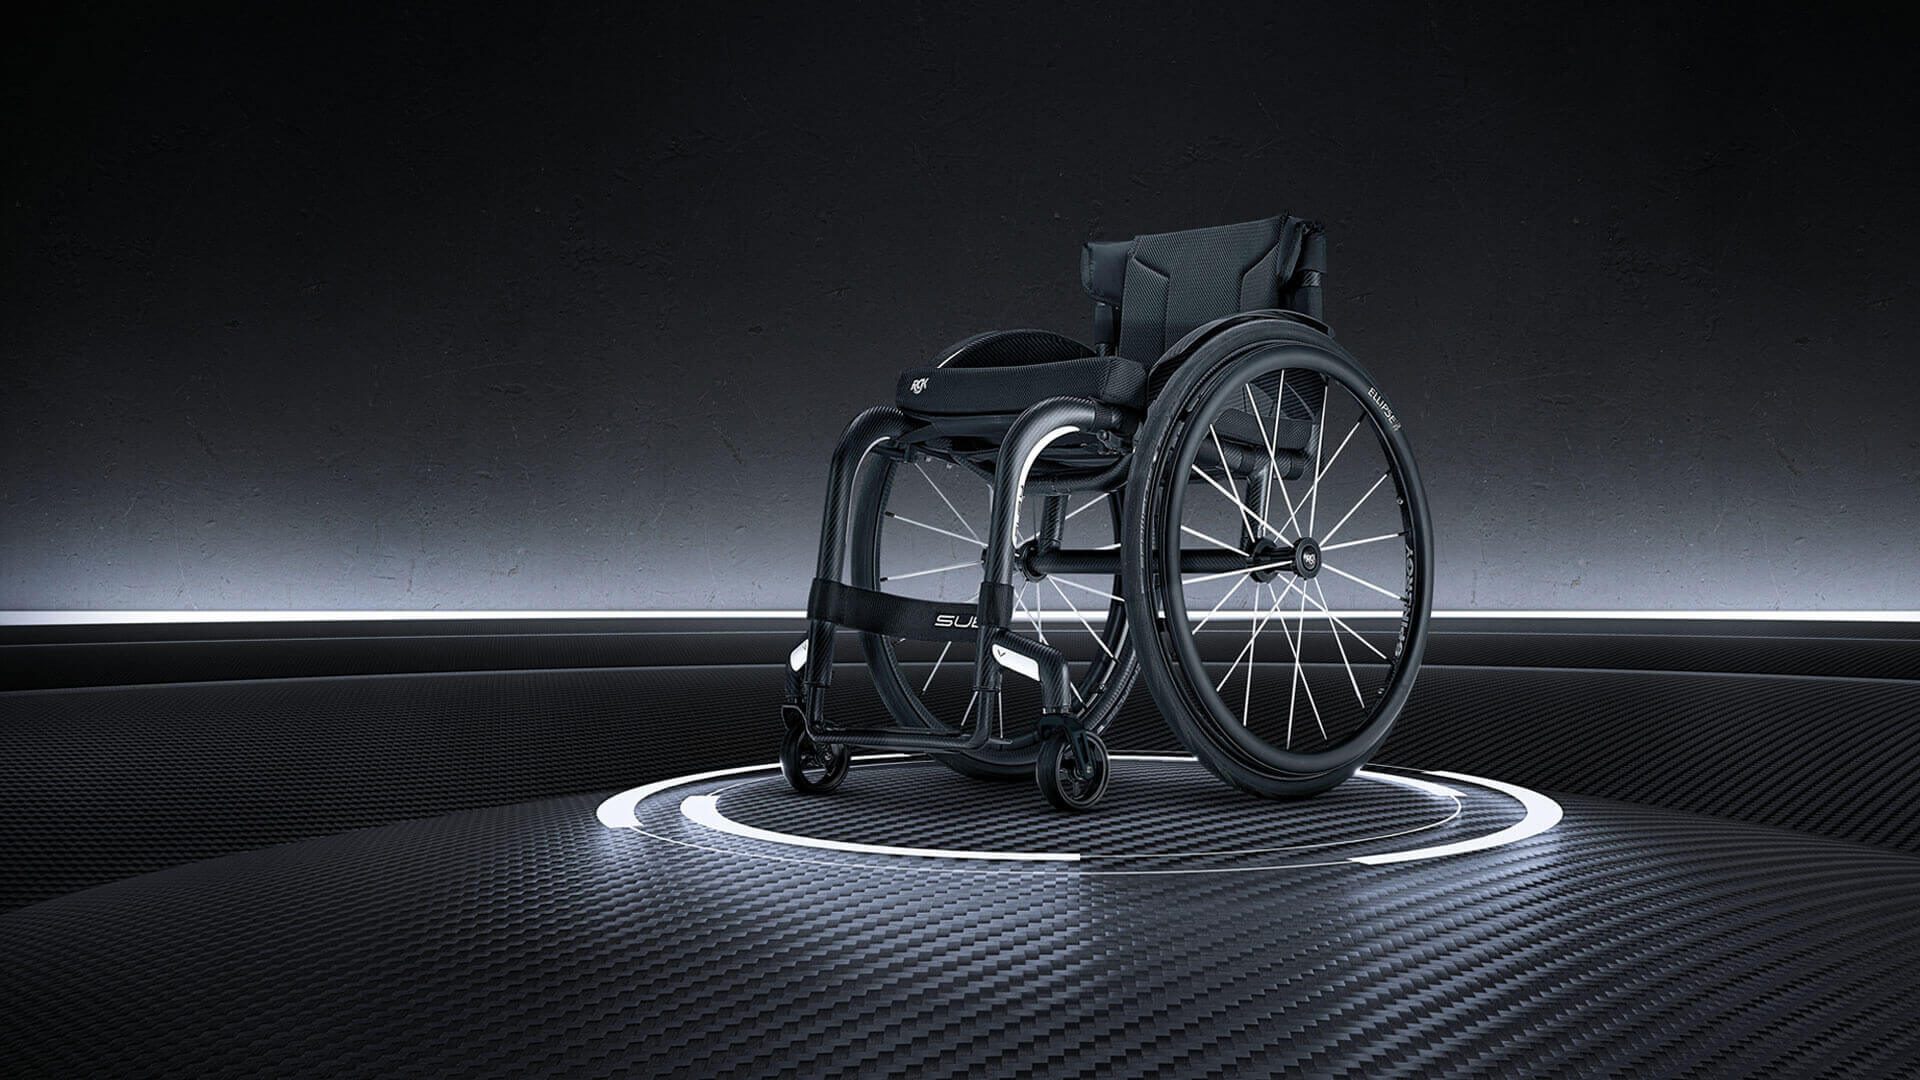 Invalidní vozík RGK Veypr Sub4 získal Hardingovu cenu za inovaci na CSMC v Kanadě